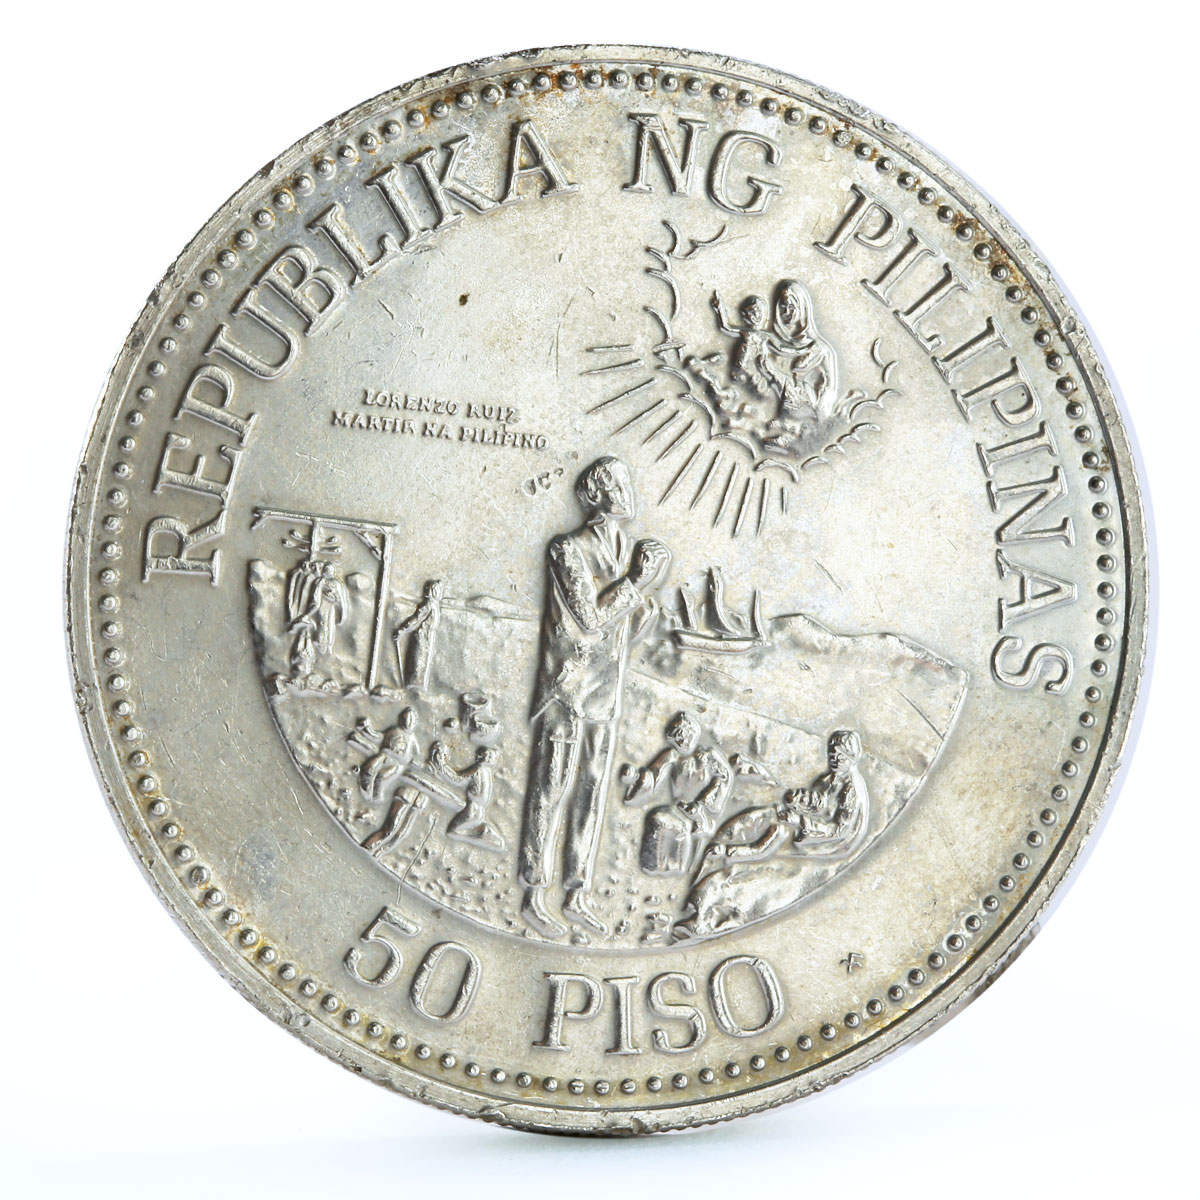 Philippines 50 piso Pope John Paul II Visit Religion Politics silver coin 1981